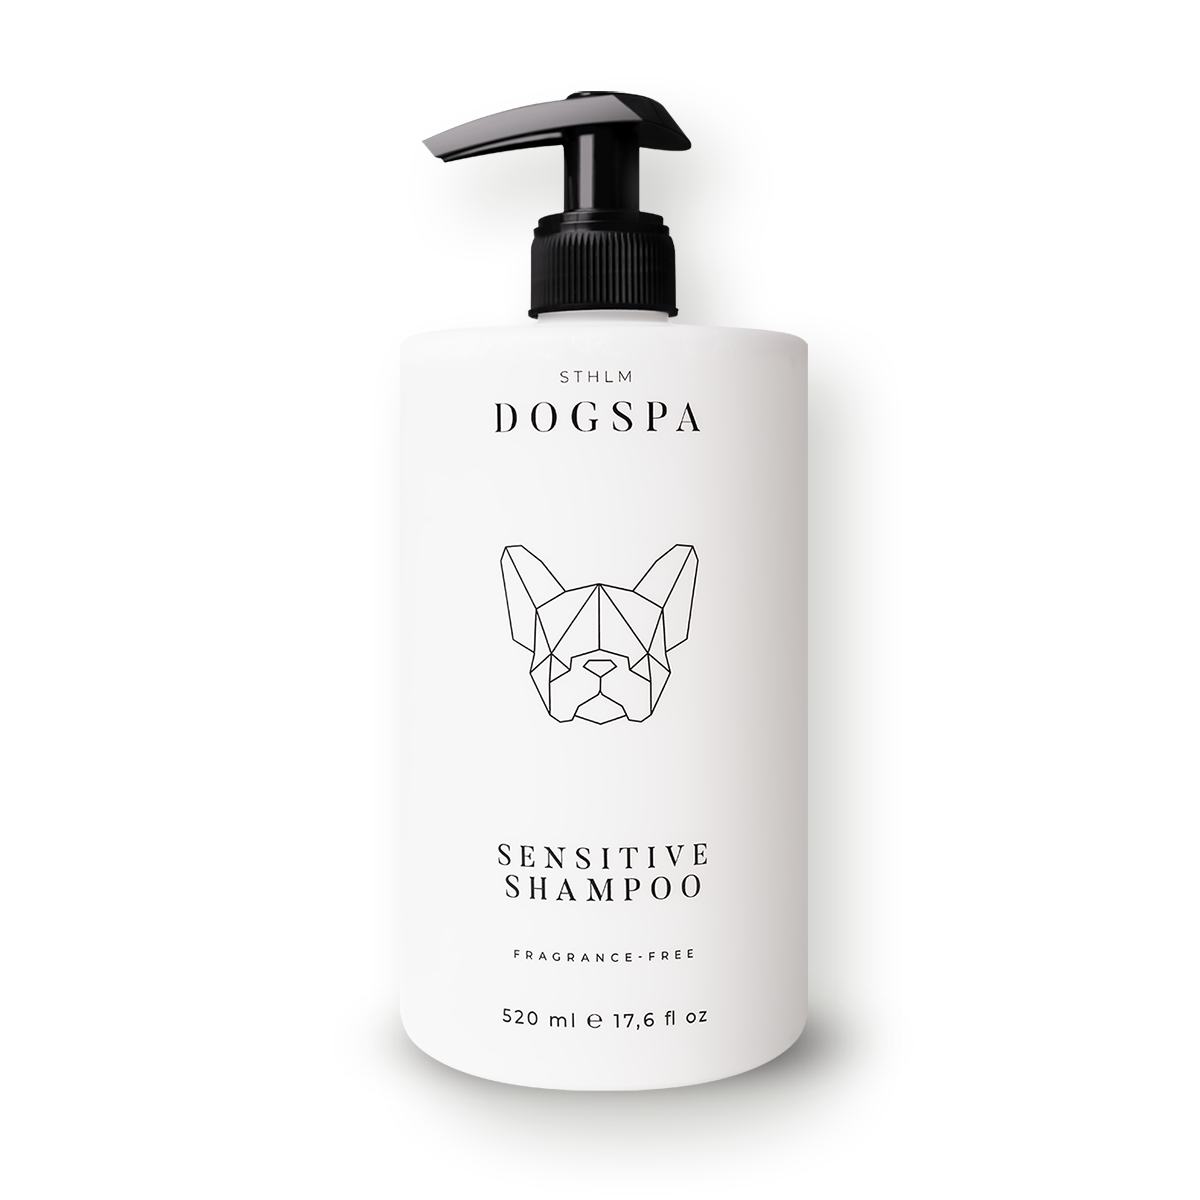 Sthlm DogSpa Sensitive Shampoo 520ml